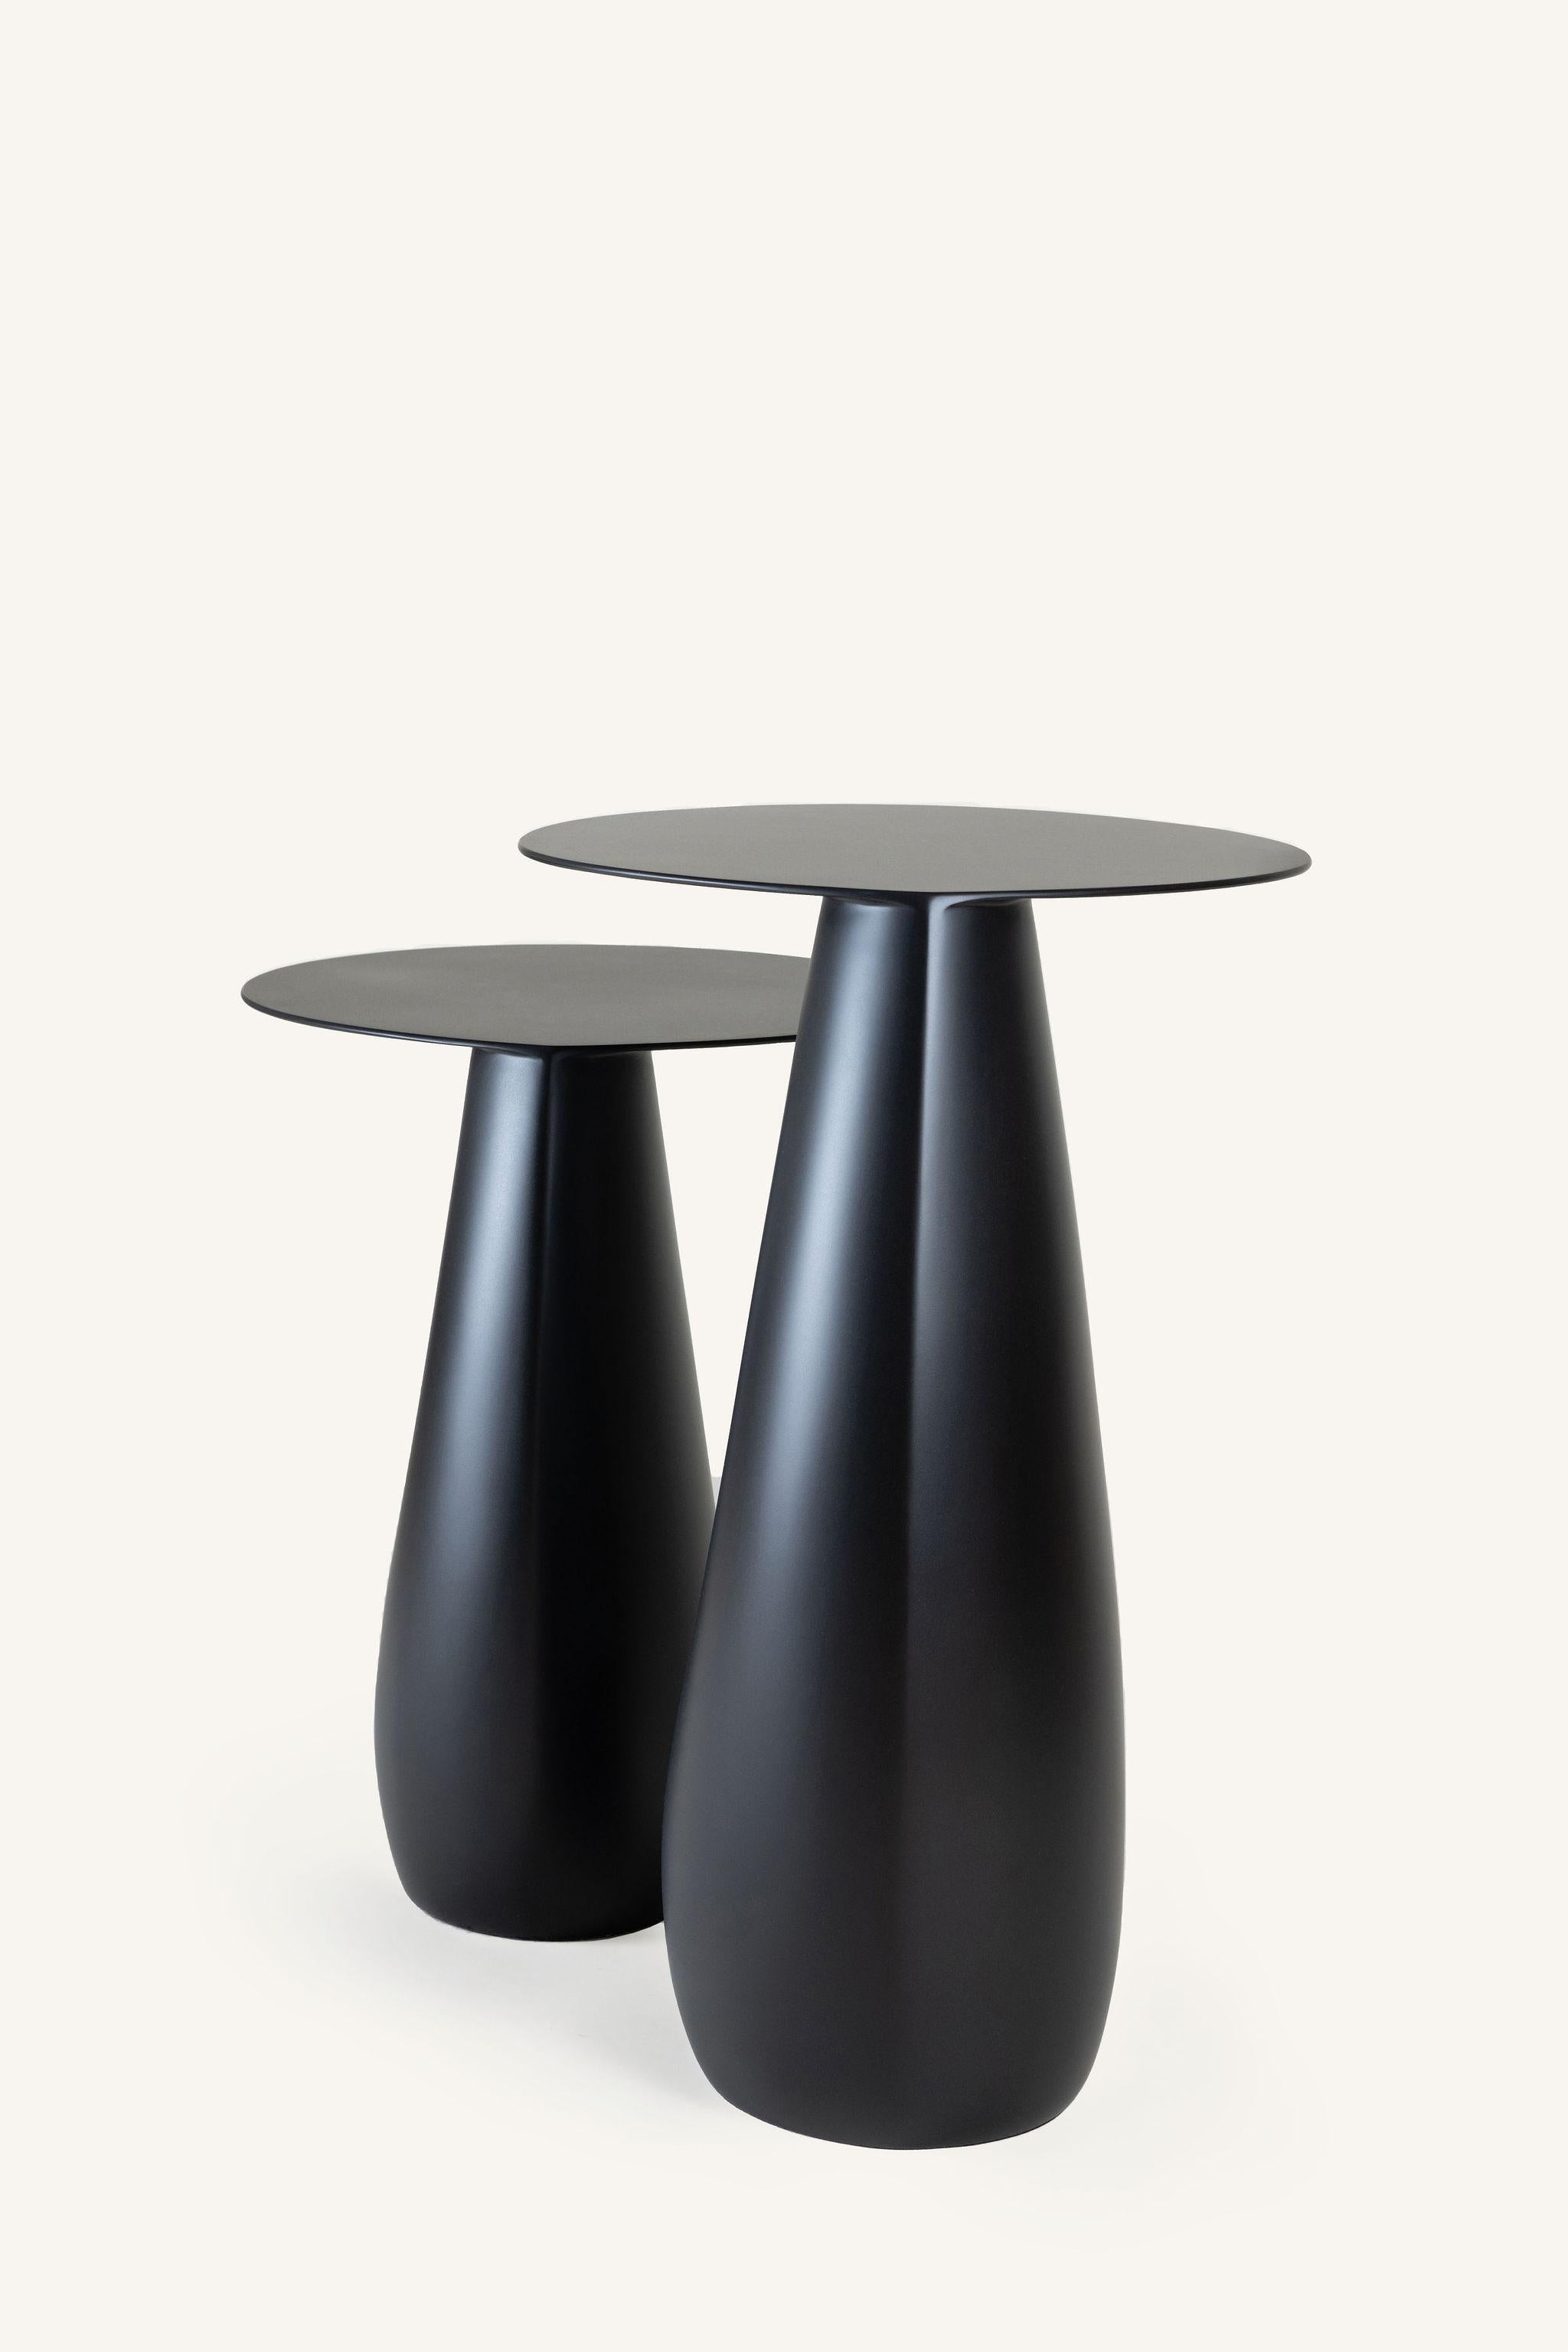 Contemporary Konekt Dionis Drinks Table in Blackened Steel 24